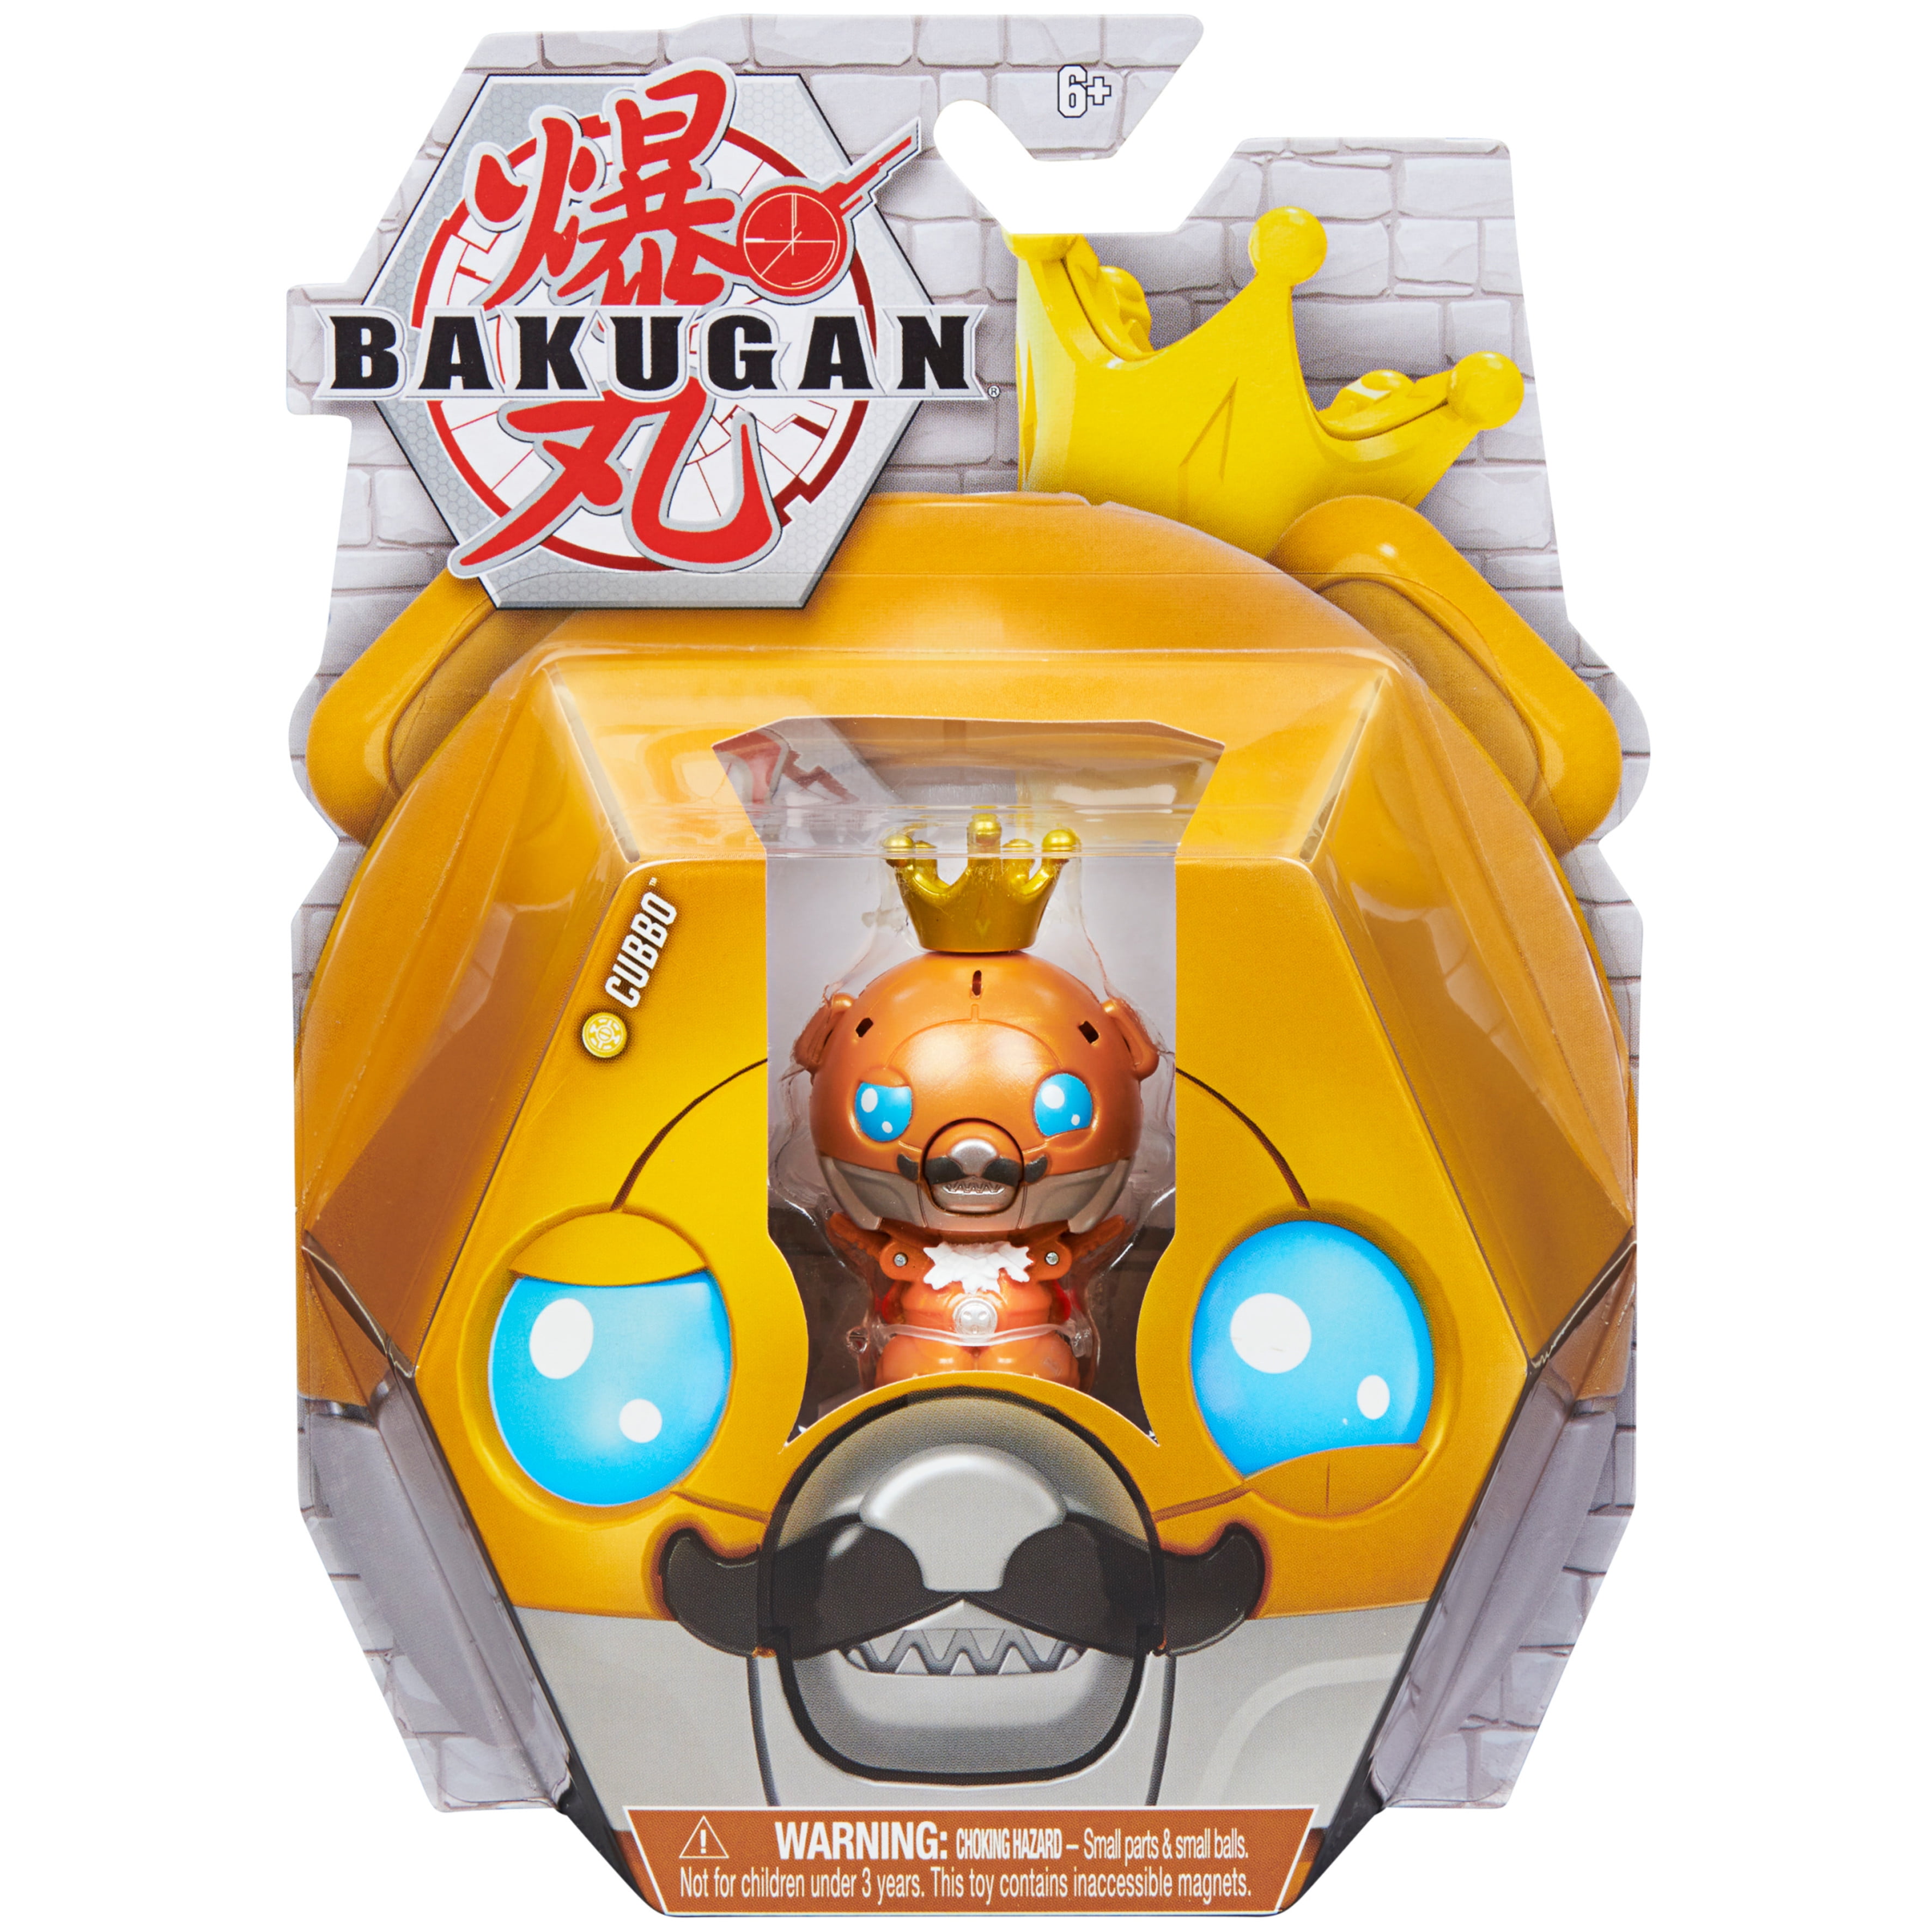 Bakugan Cubbo - Robo Cubbo Gold